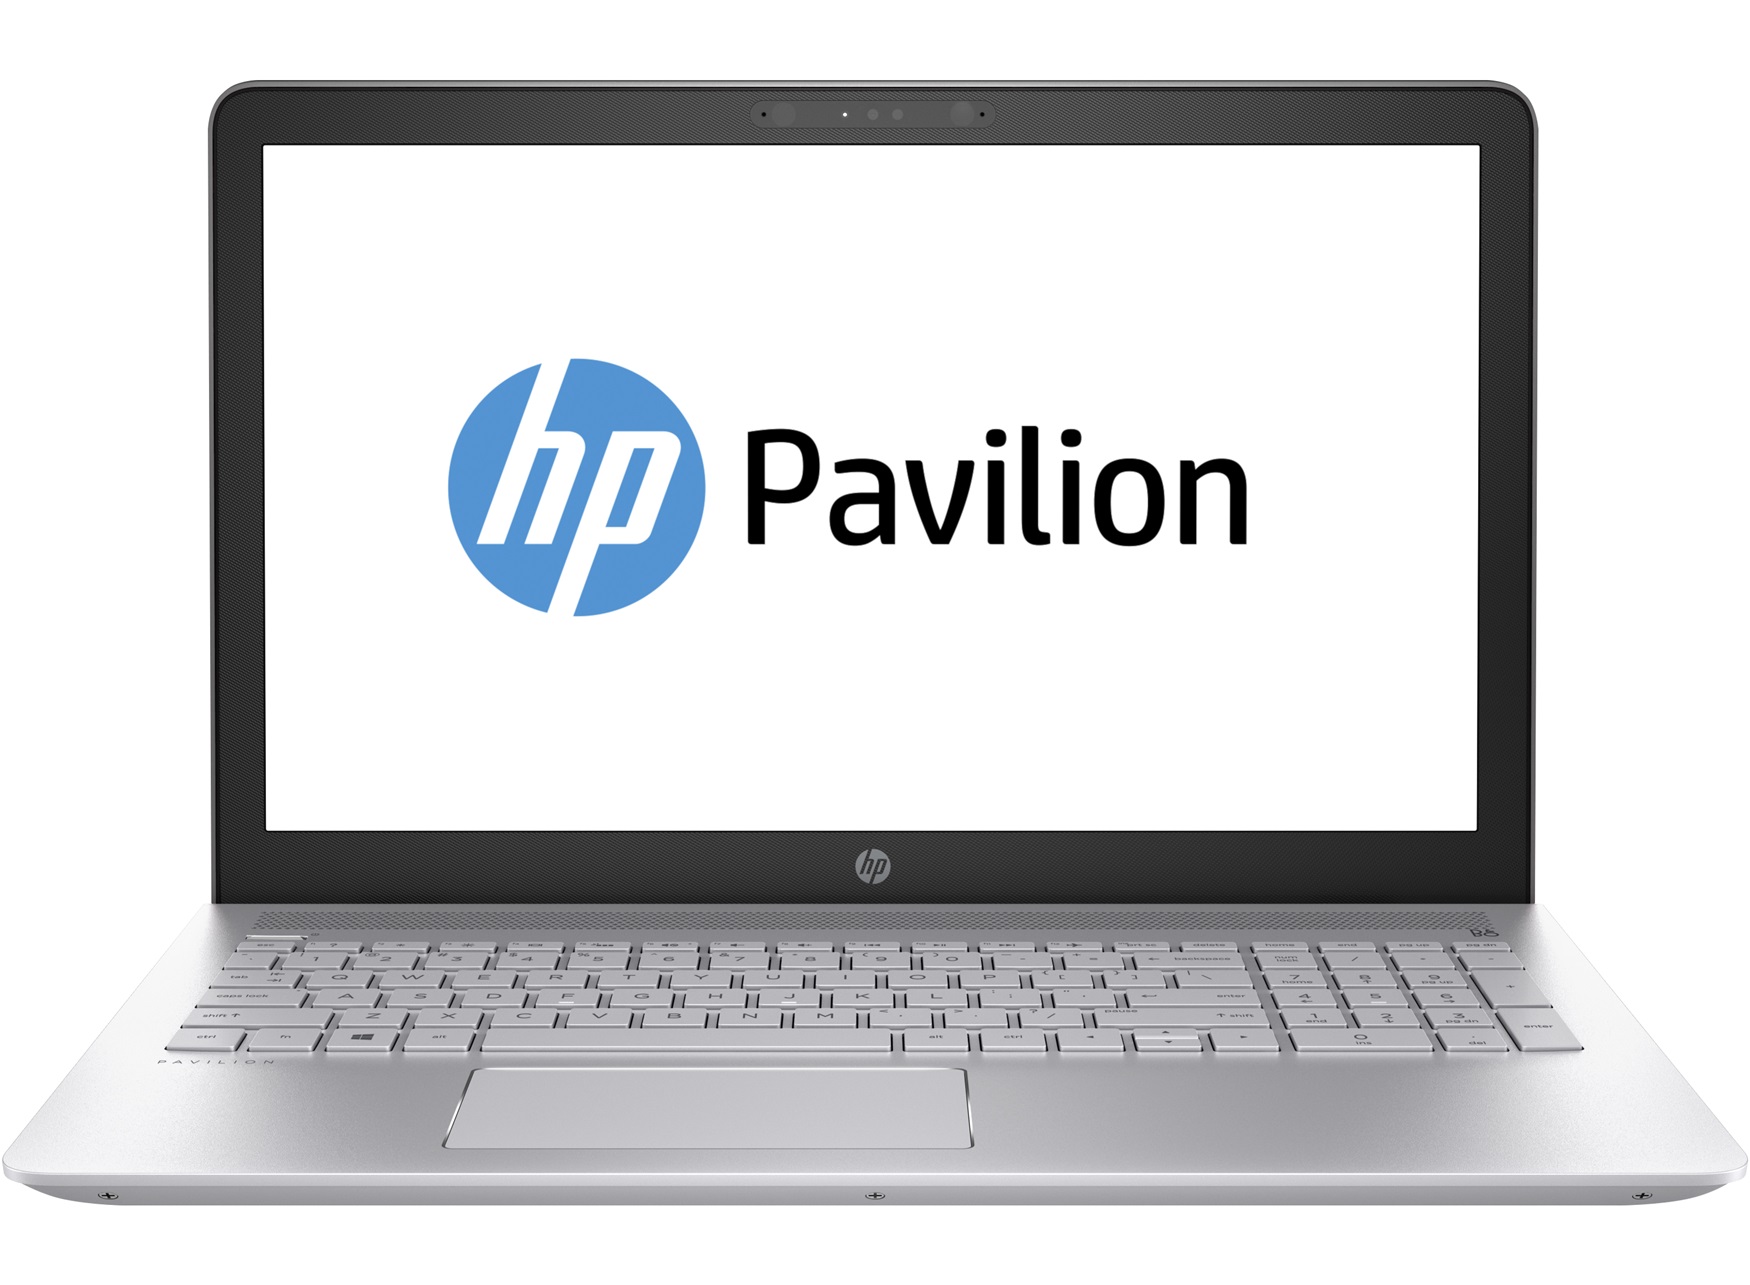 HP Pavilion 15 Intel Core i3-7100U